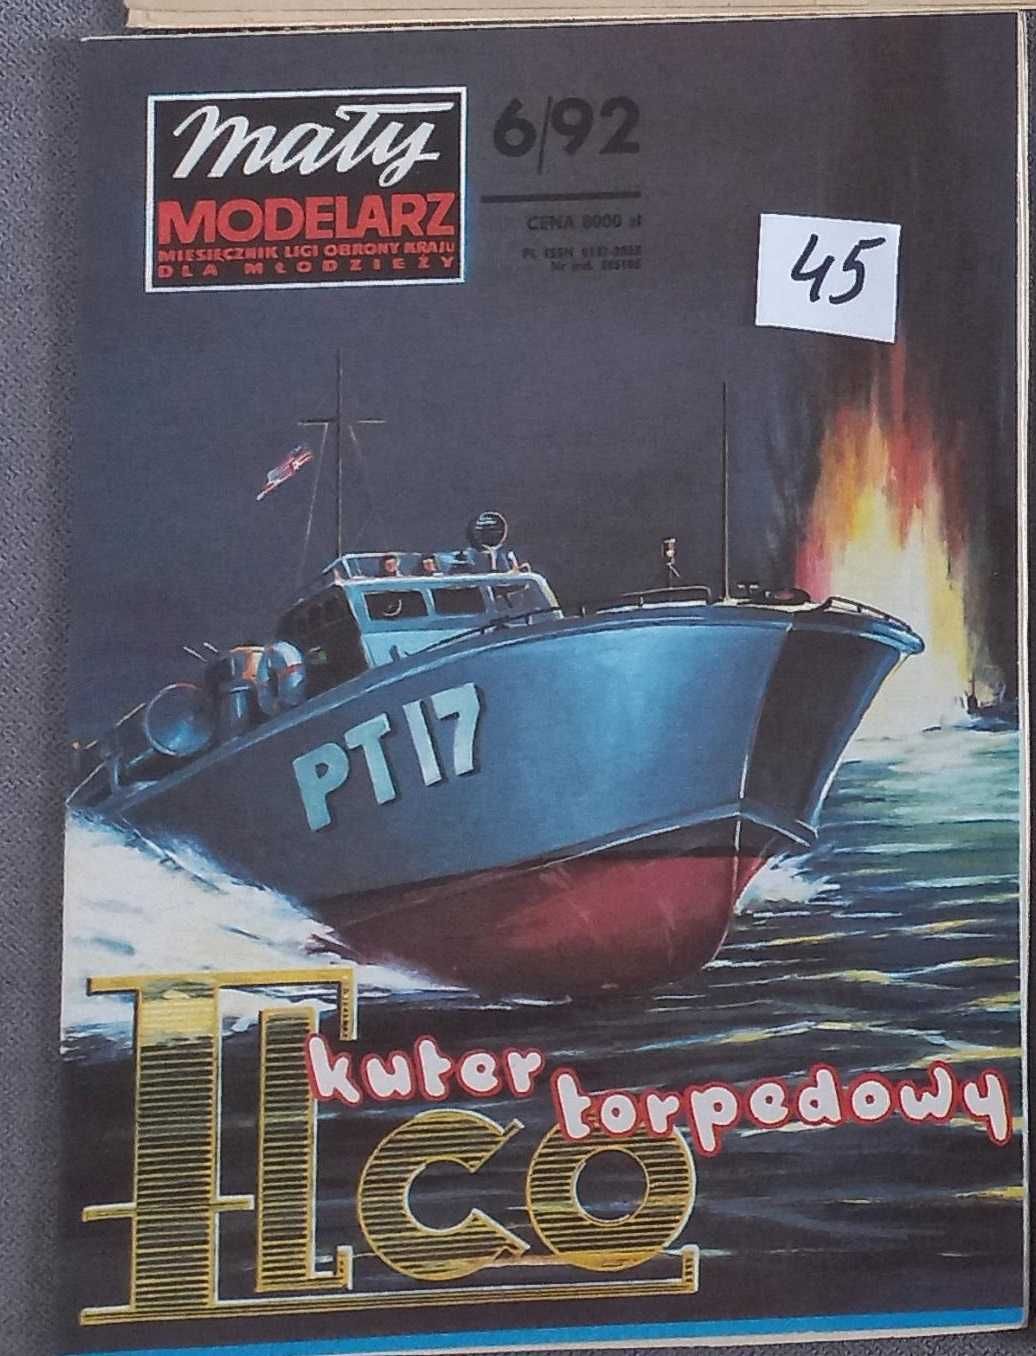 Mały Modelarz 6/1992 Kuter Torpedowy Elco